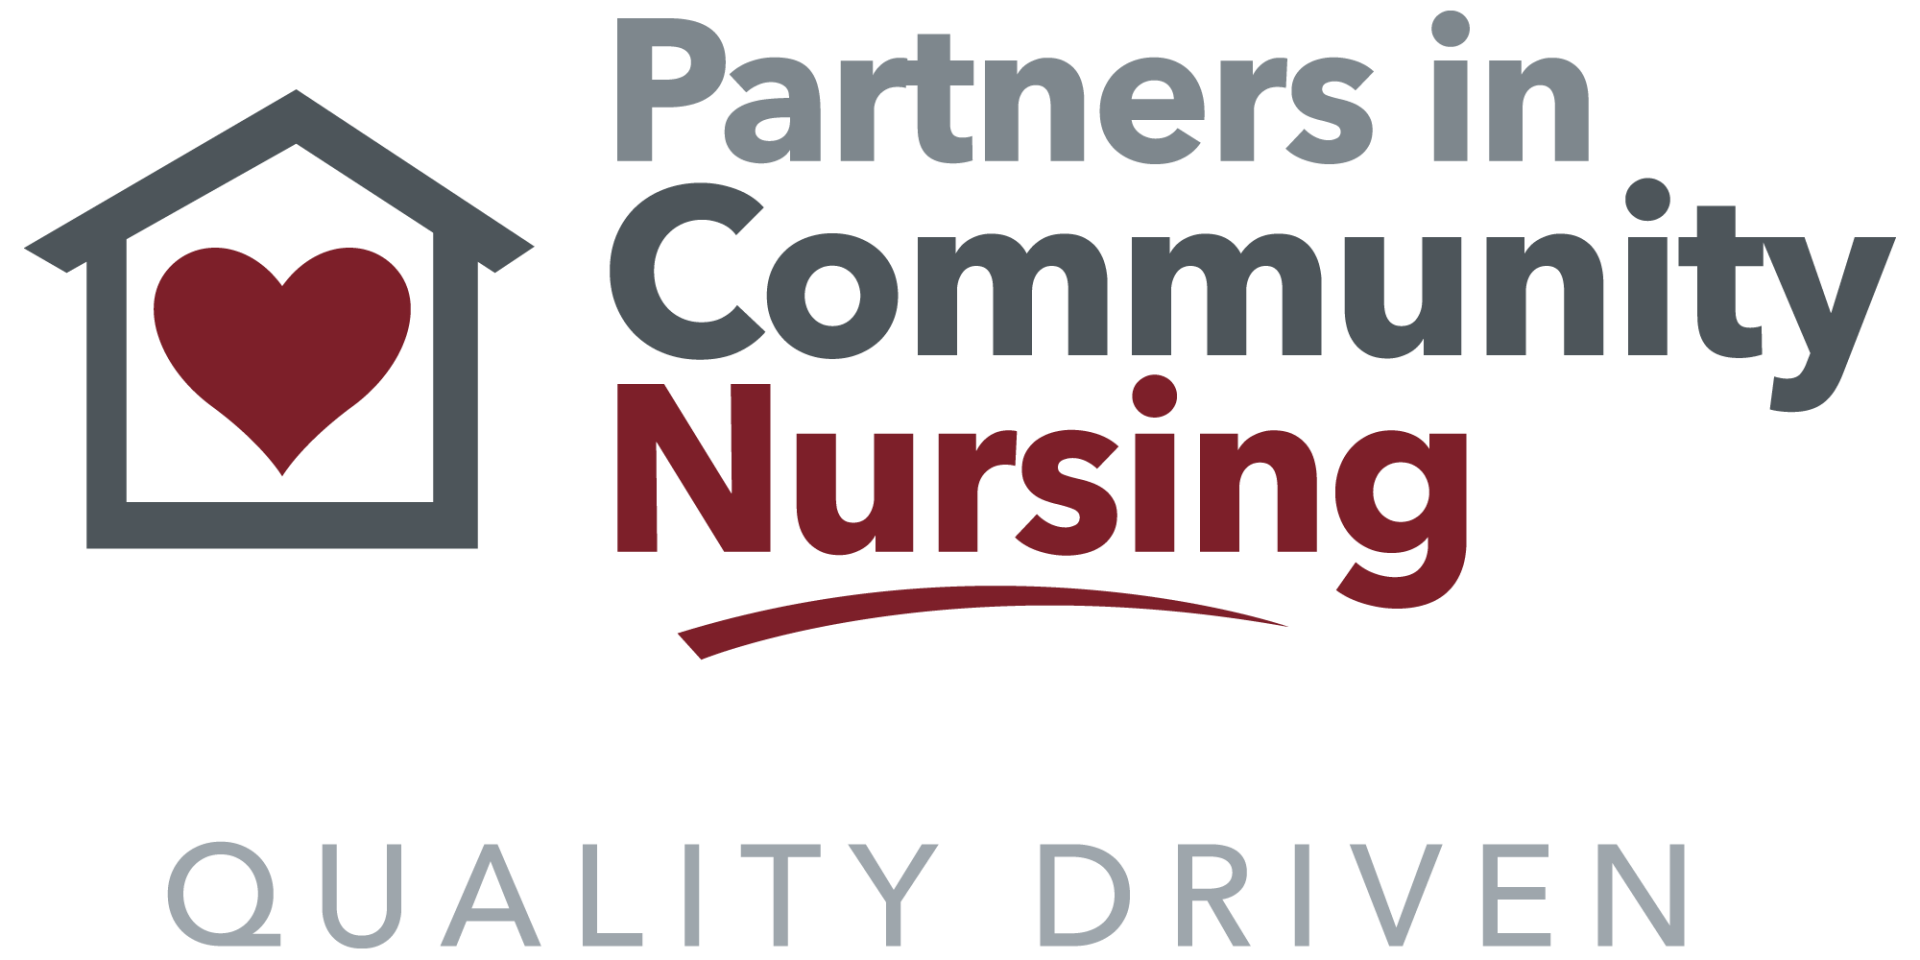 Partners in Community Nursing logo. Quality Driven Tagline